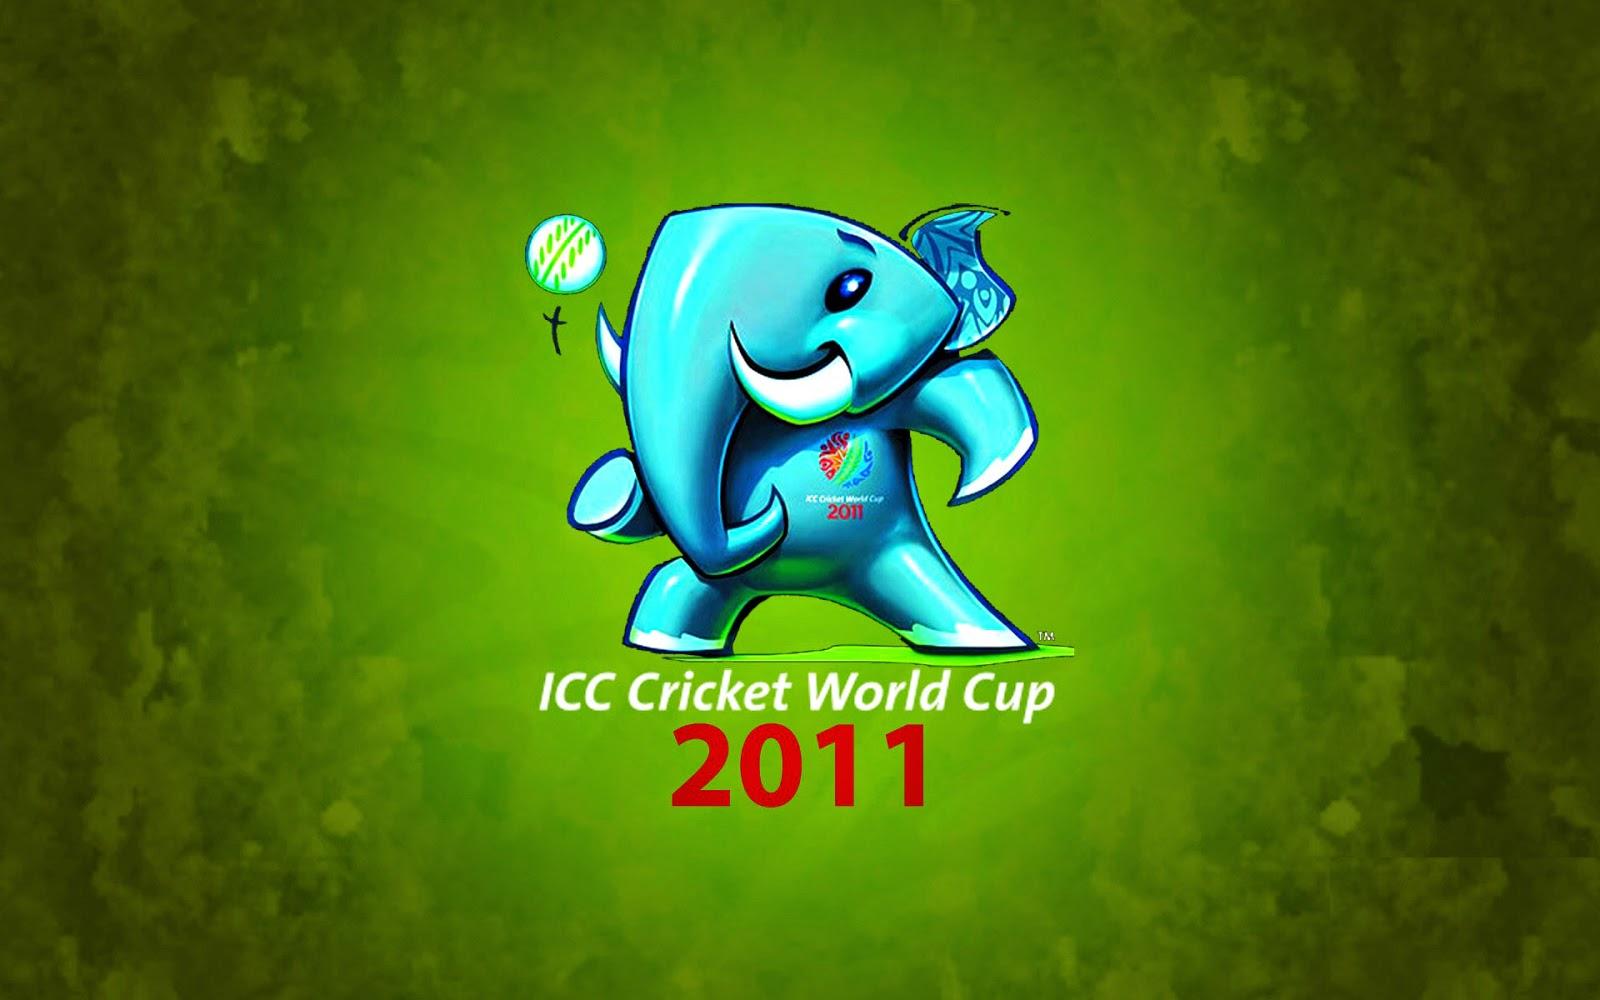 Cricket Wallpaper Full Best Image HD Free Download Online